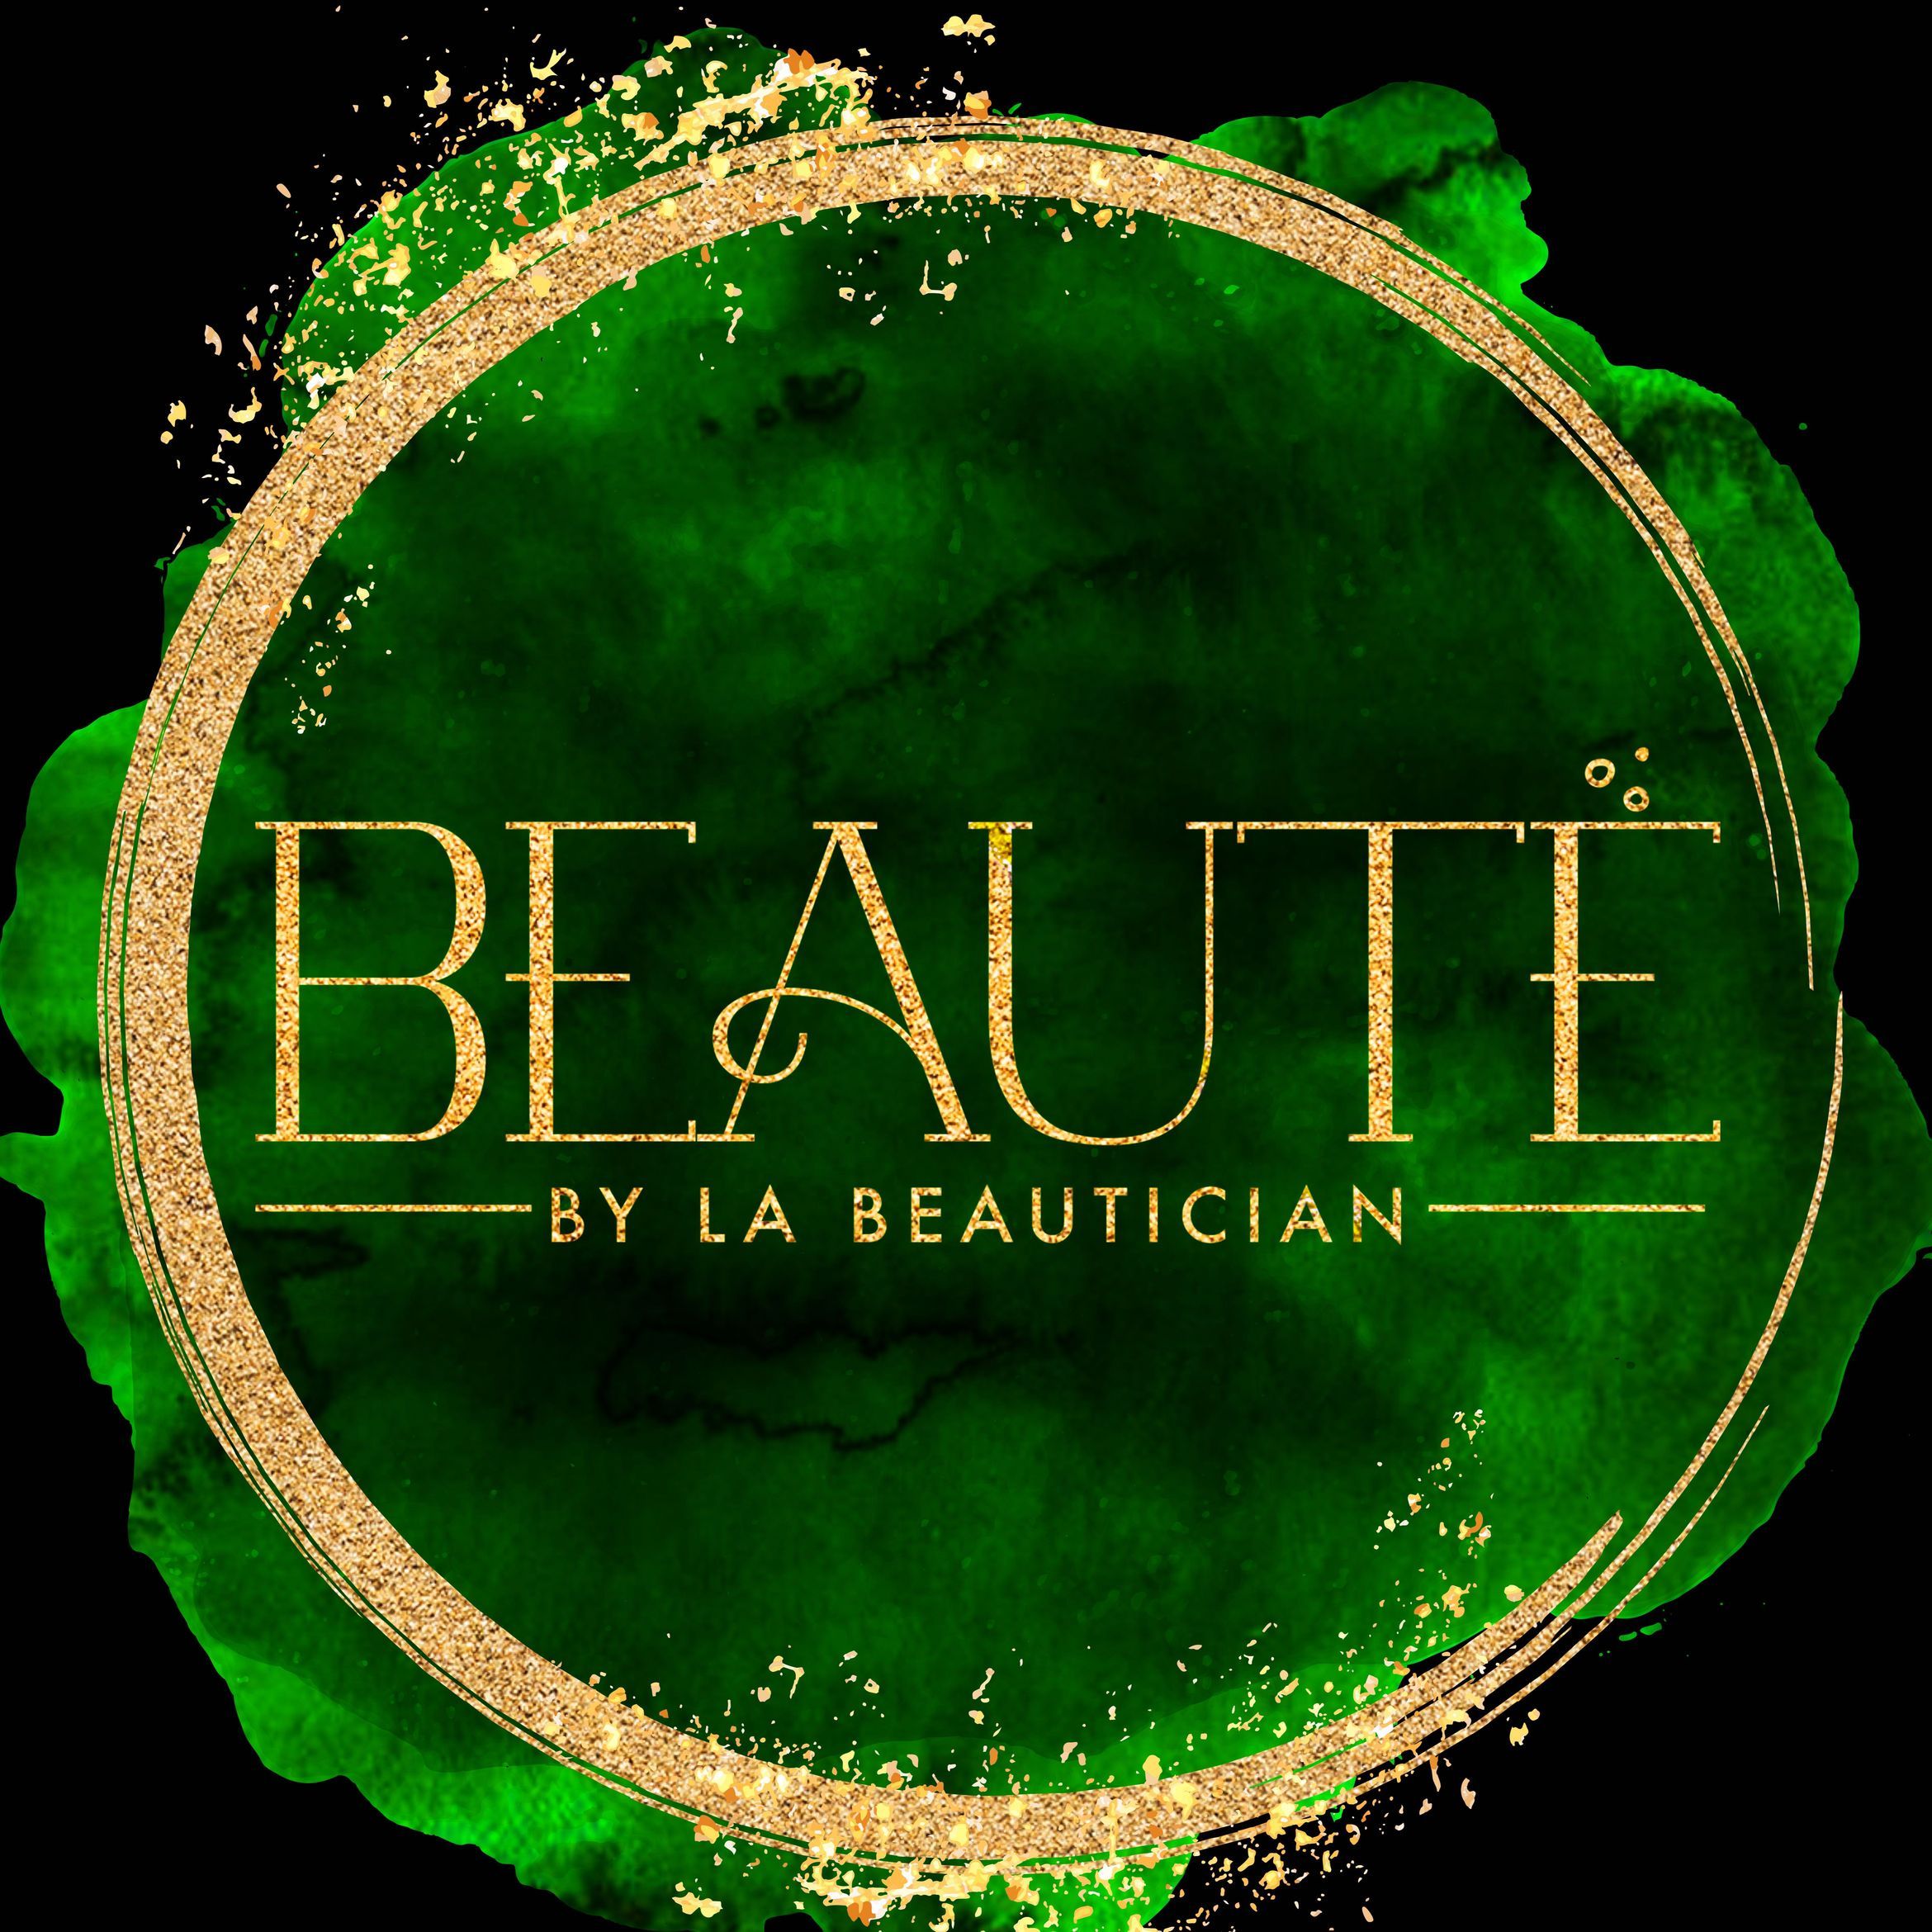 Beauté By La Beautician, 1013 America way, Kissimmee, 34746